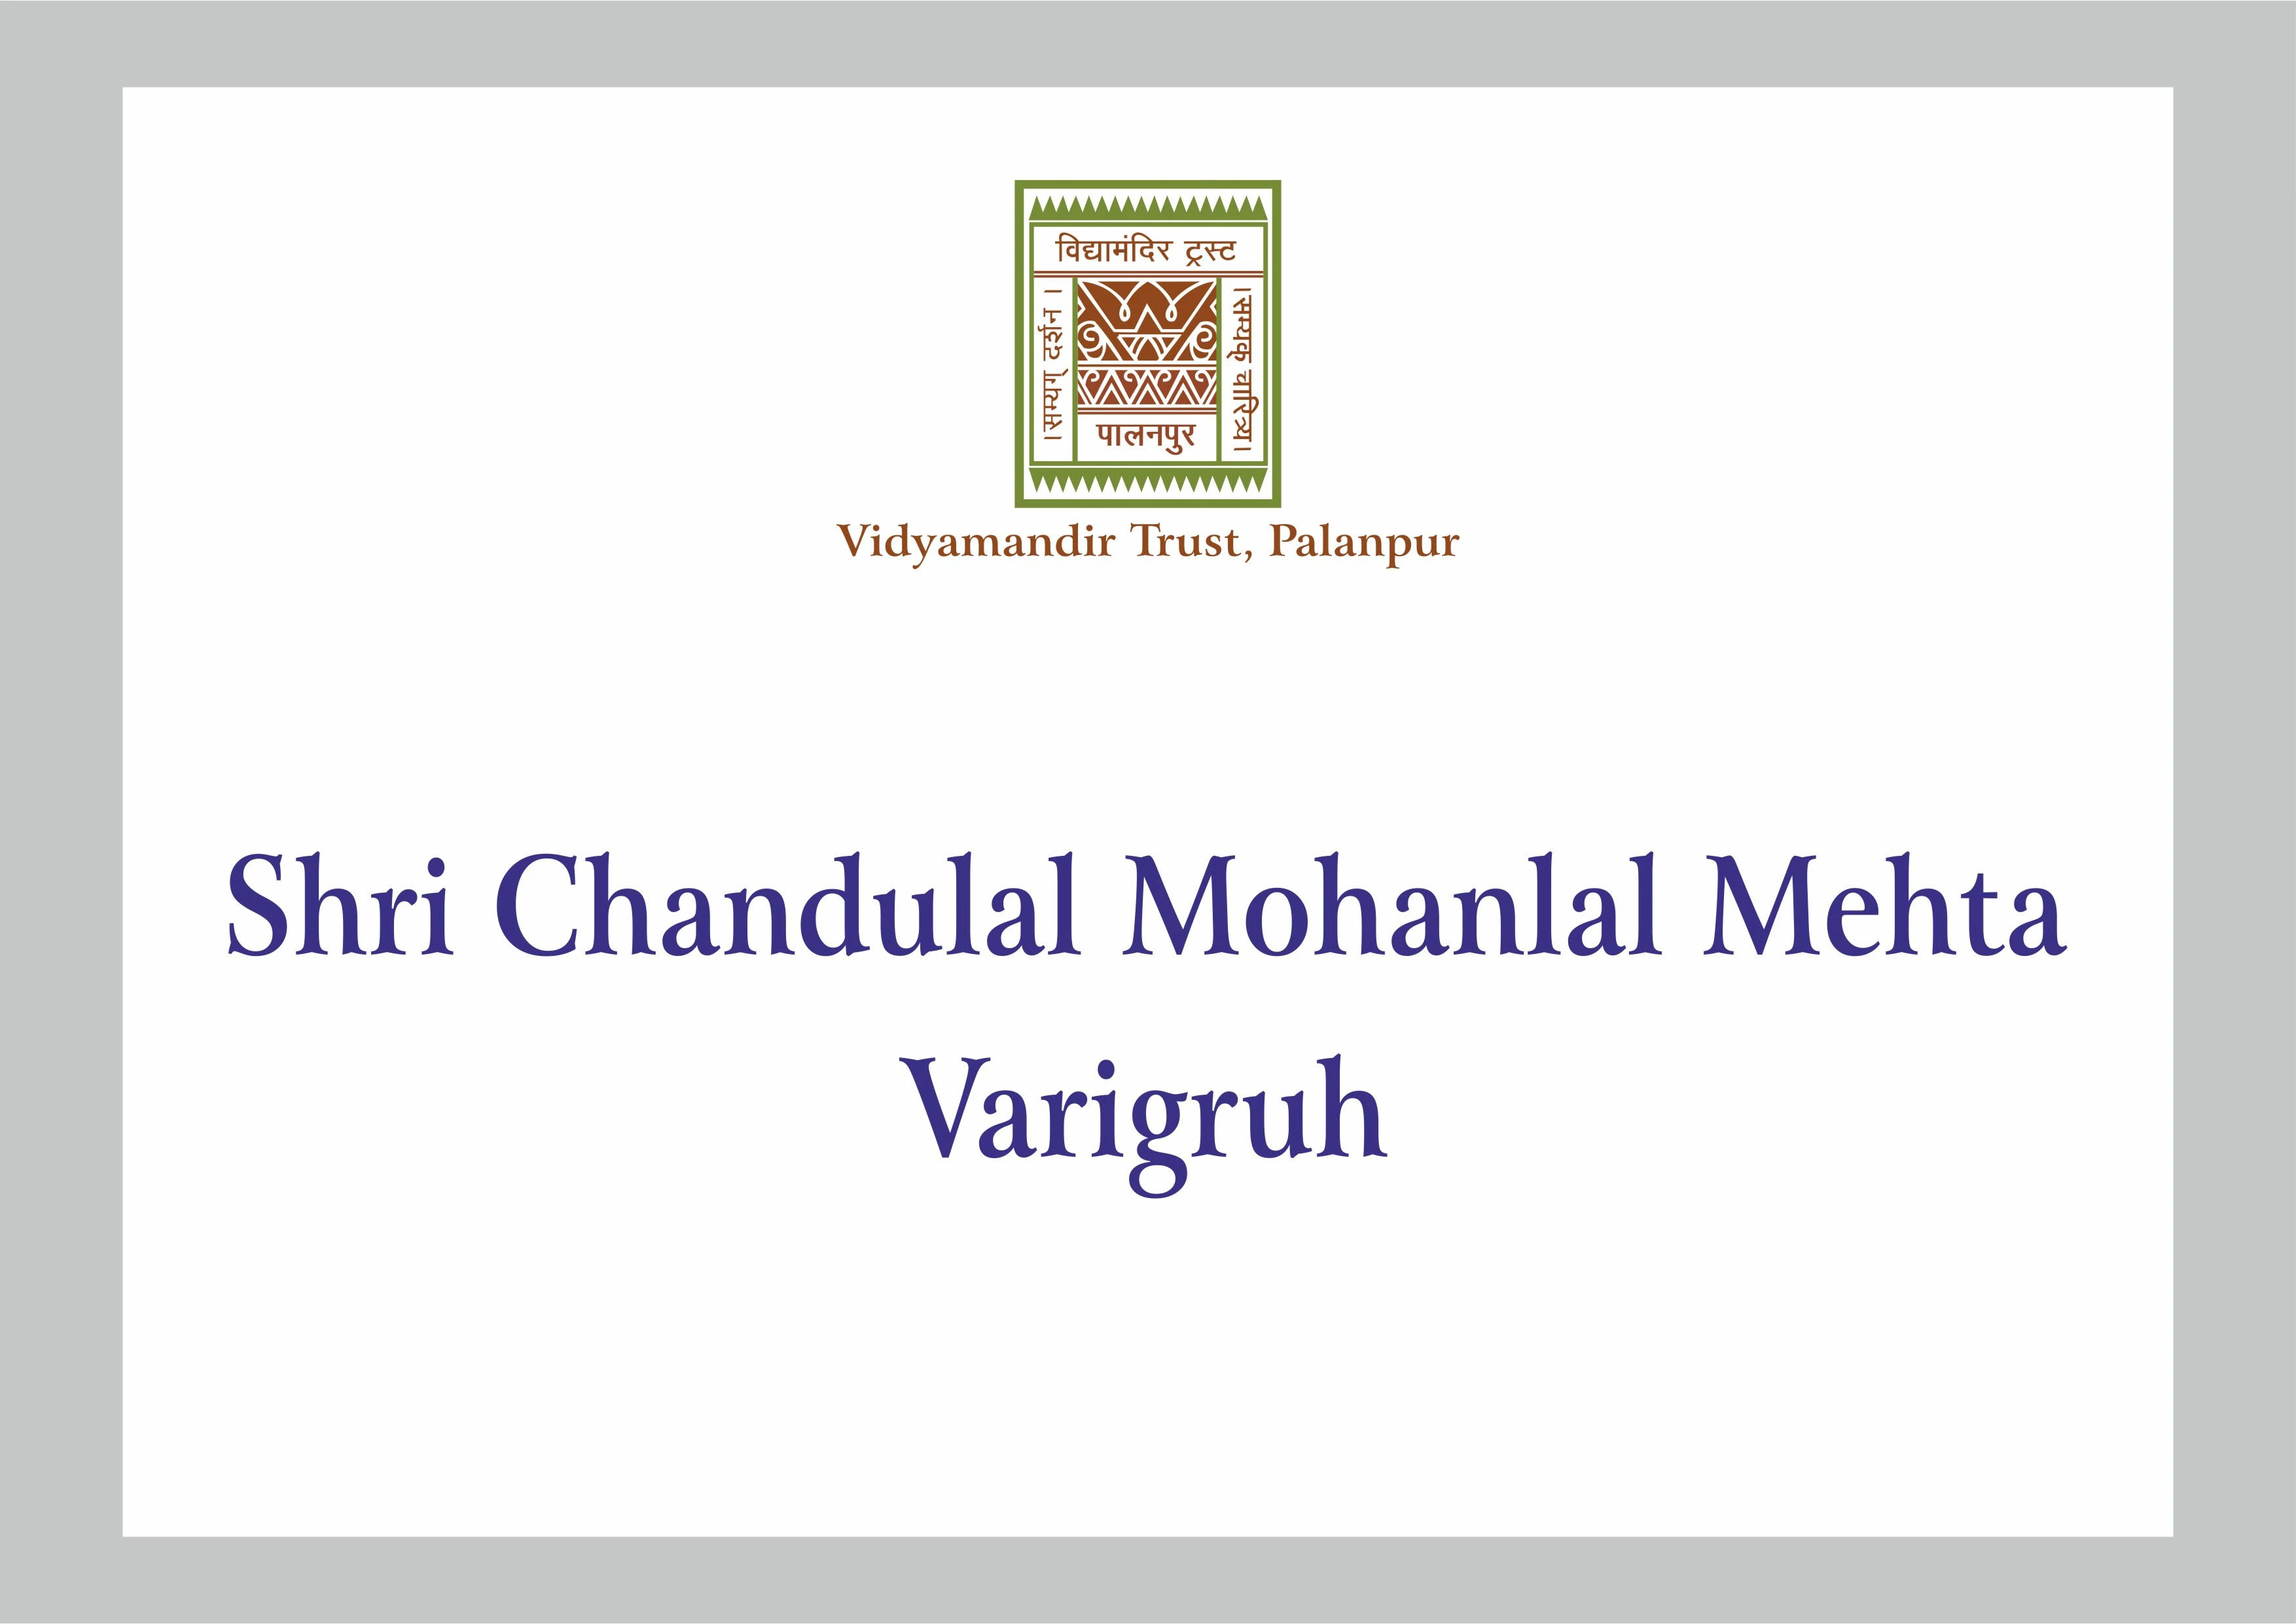 Shri Chandulal Mohanlal Mehta Varigruh - Building Photo